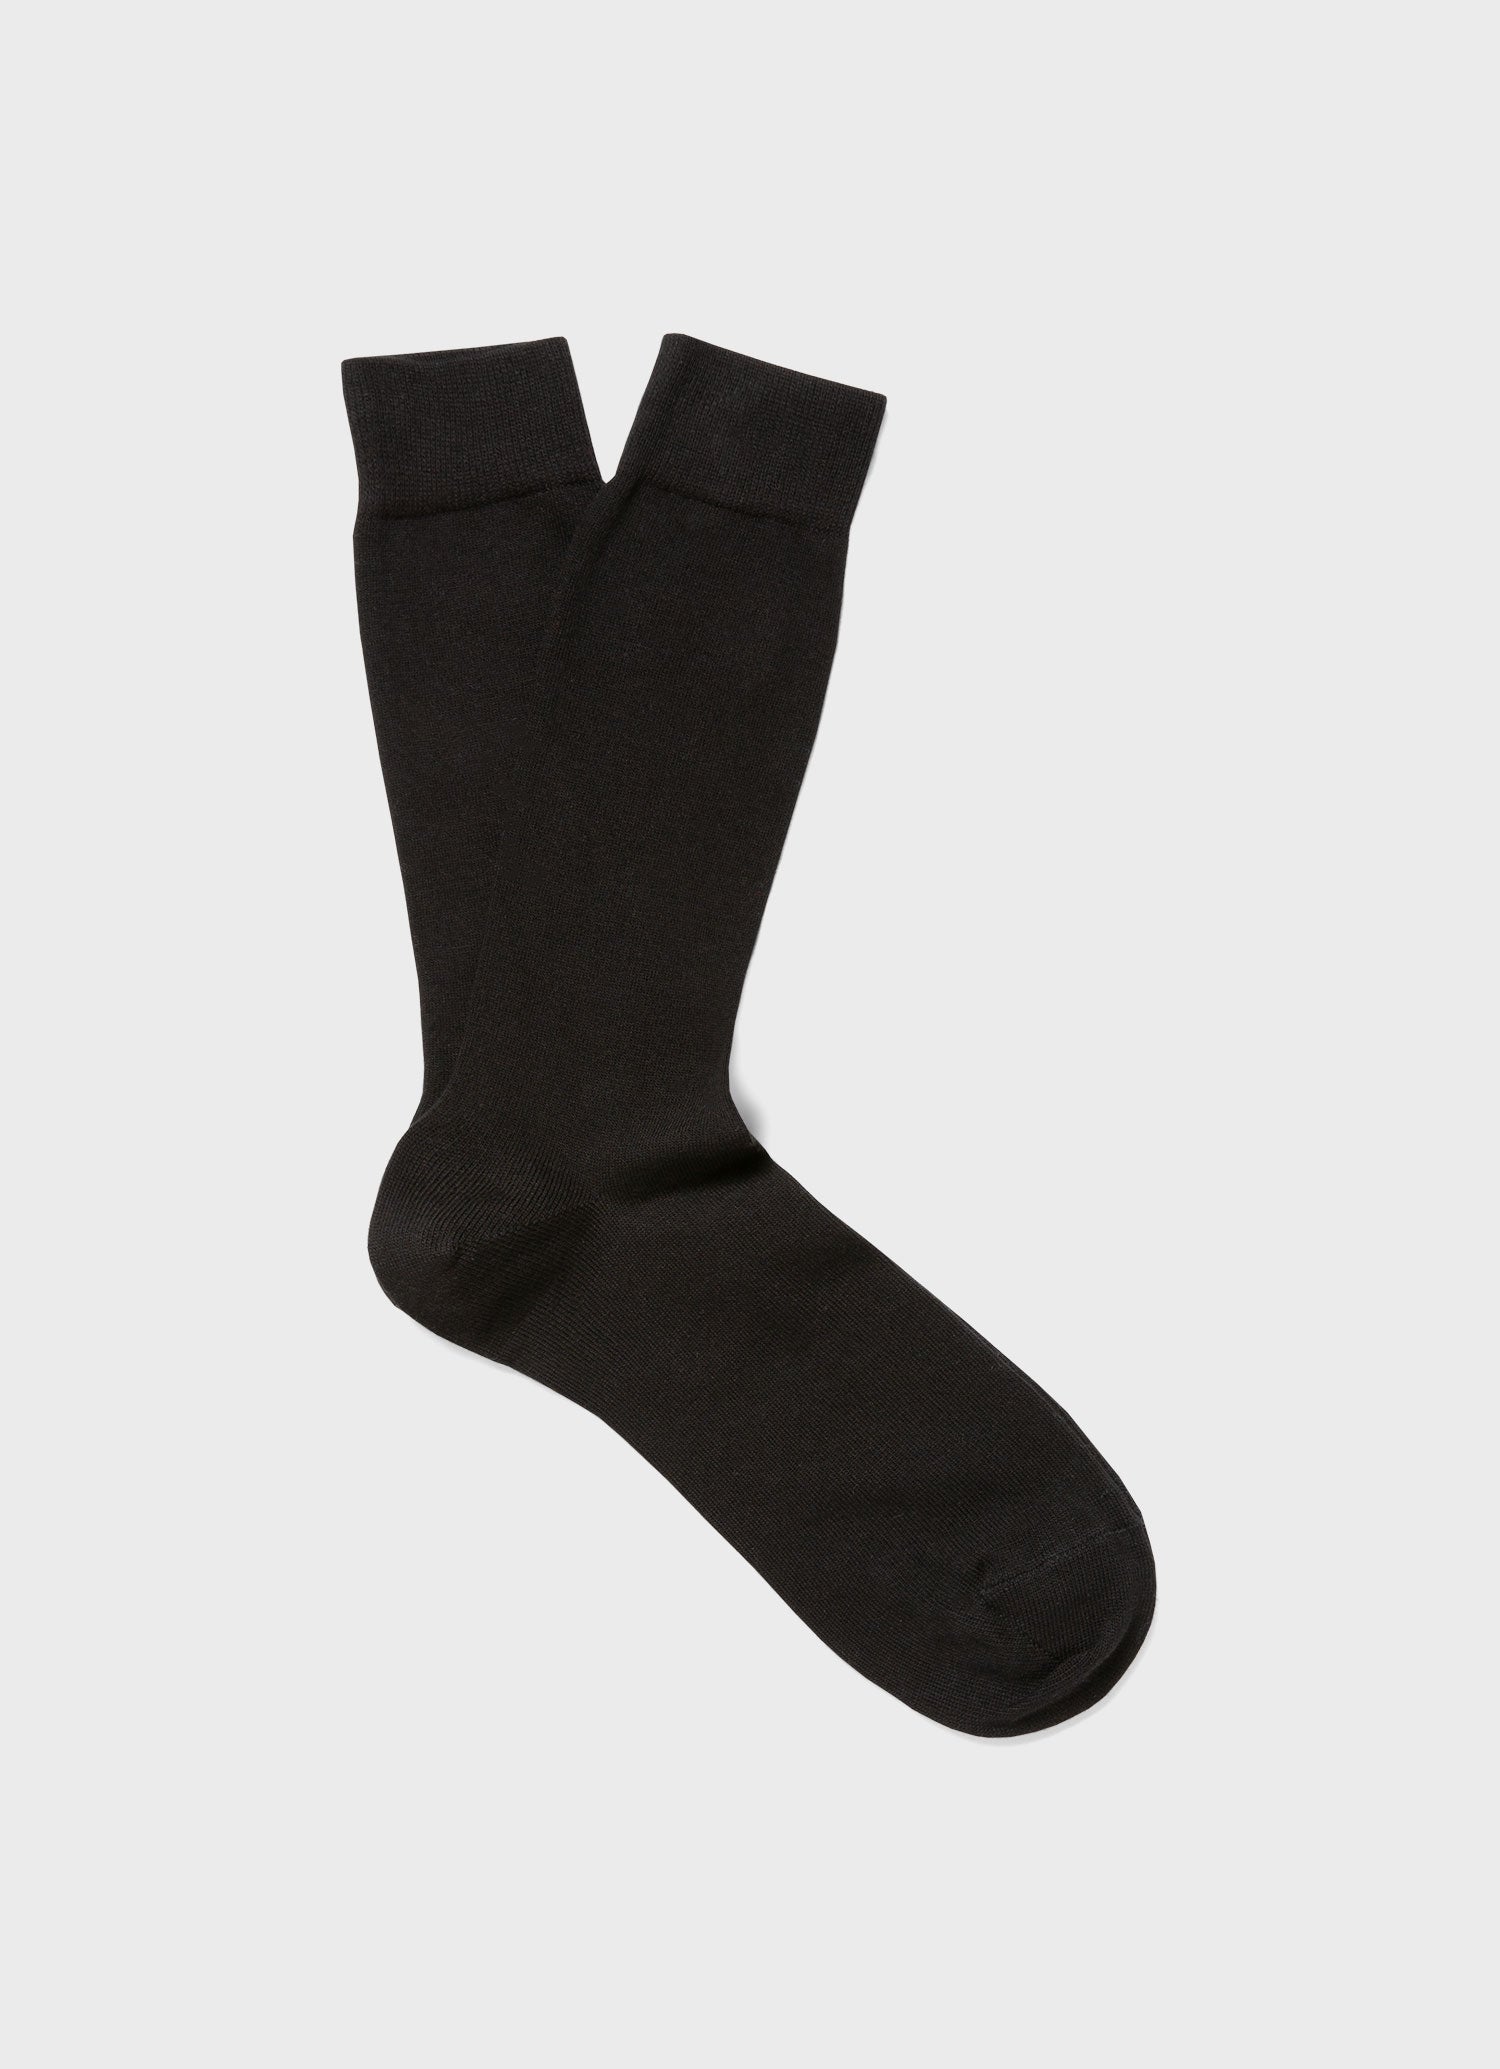 Men's Cotton Socks in Black | Sunspel